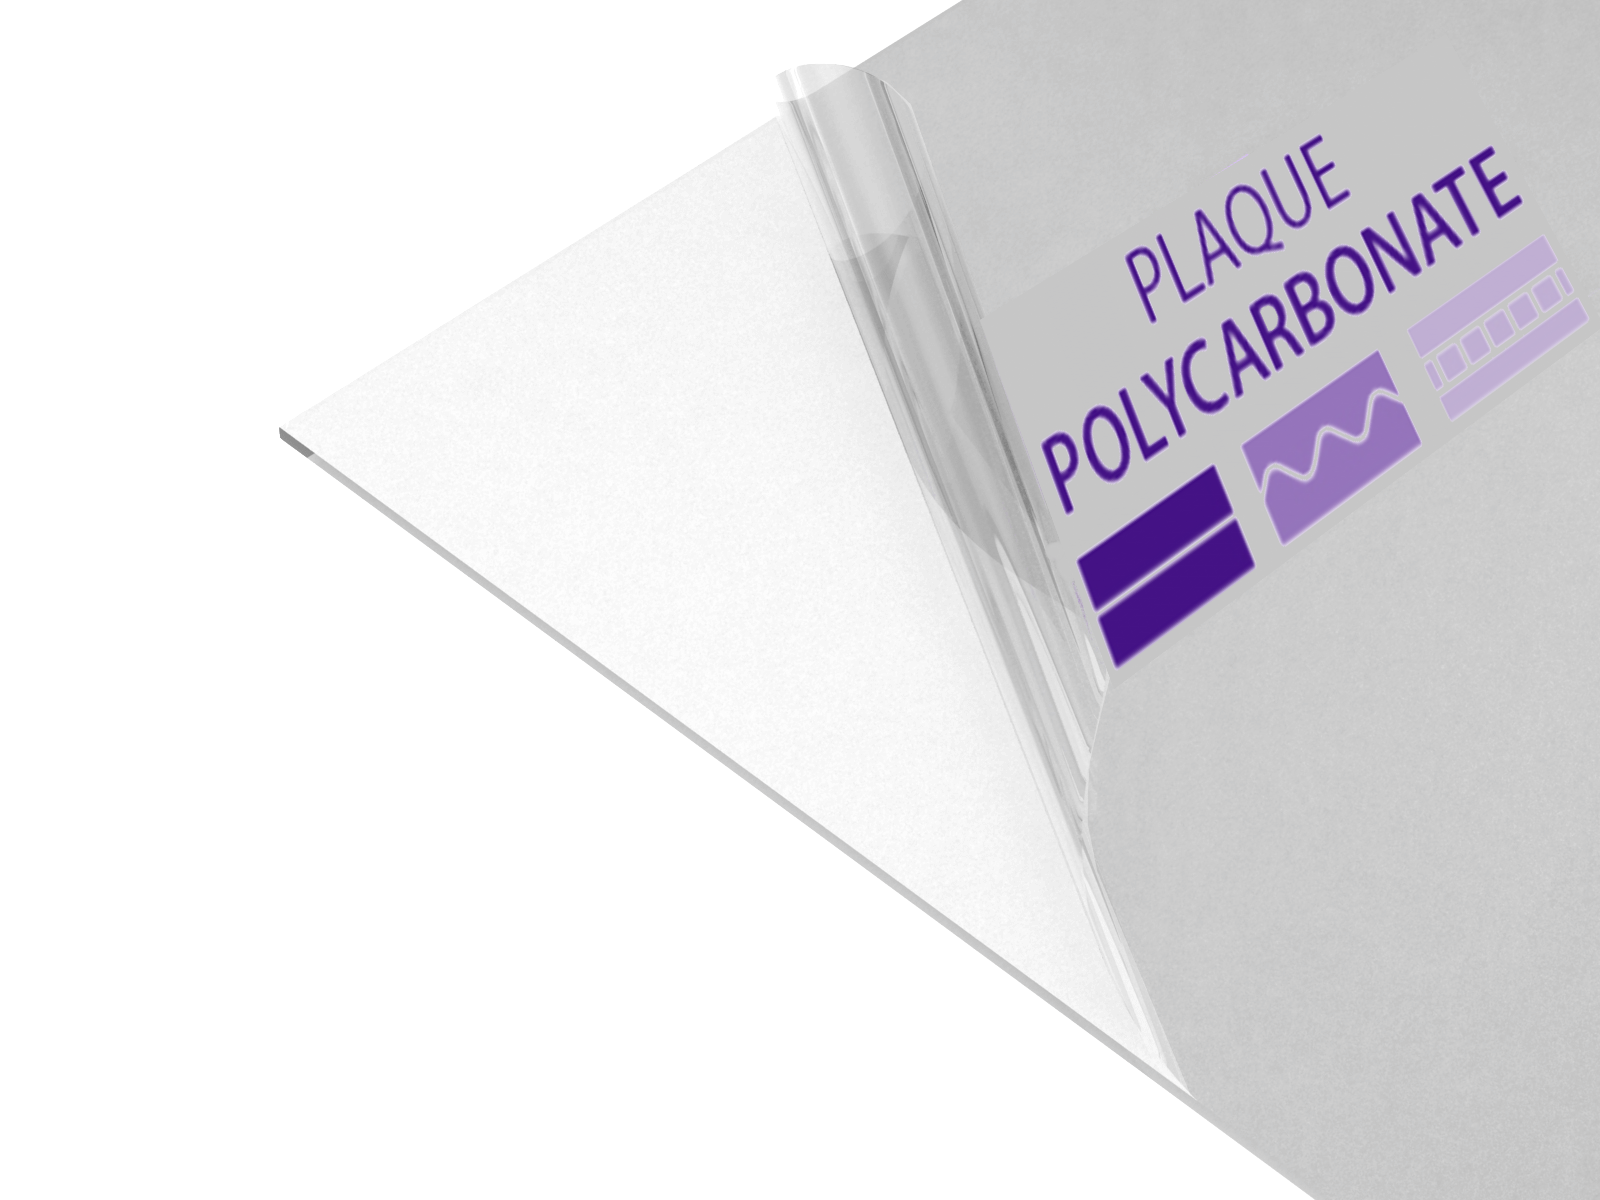 Polycarbonate compact